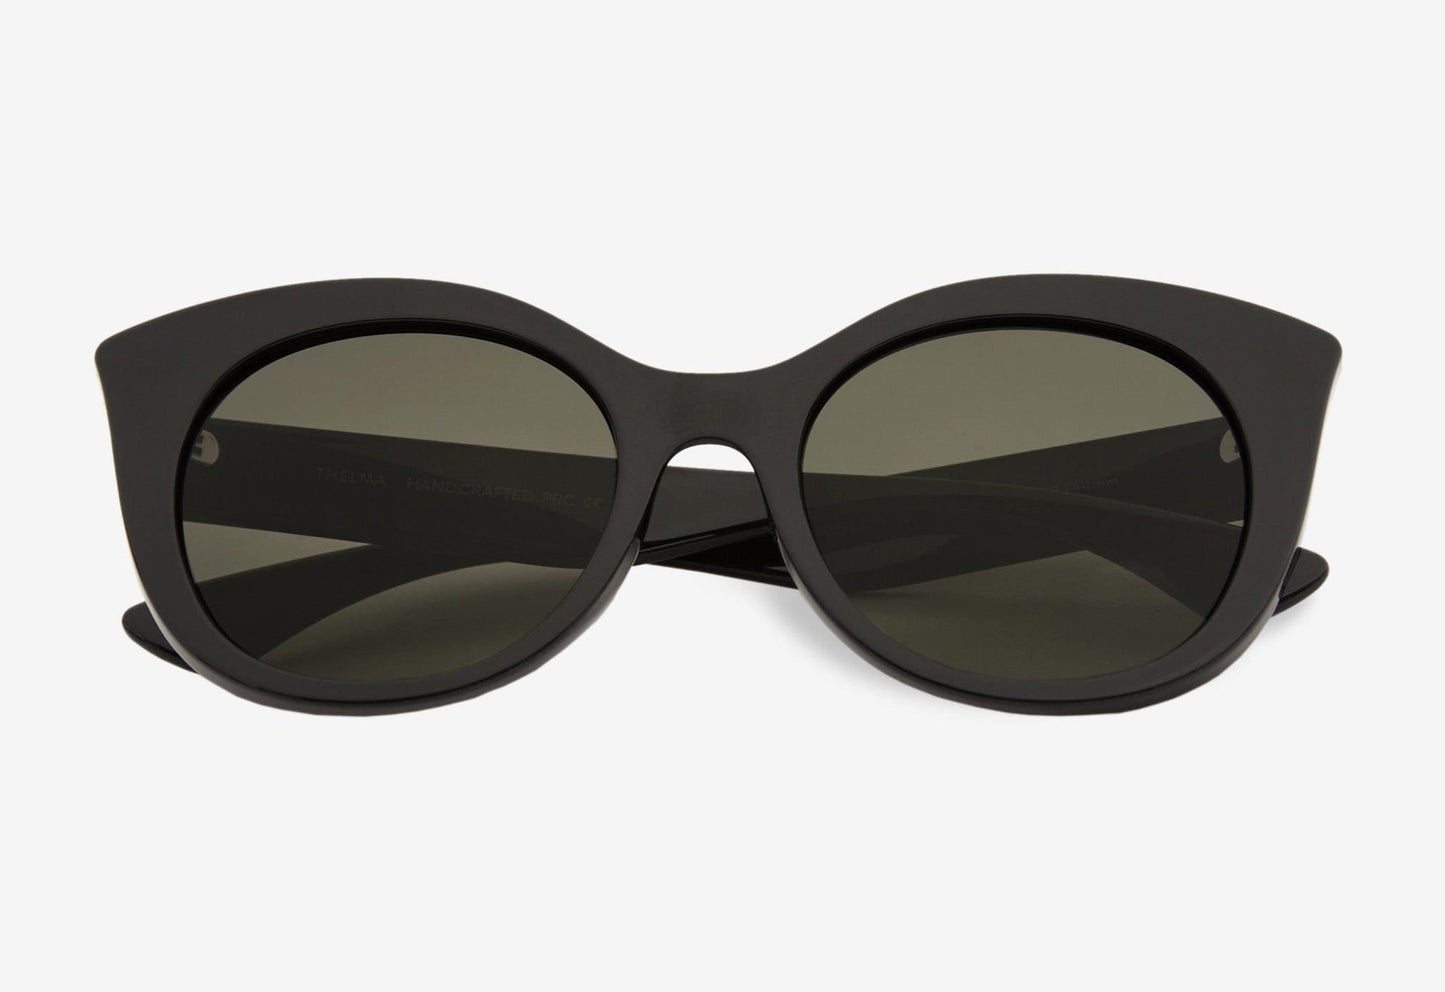 Thelma, Cat eye sunglasses for women dark green lens UV400 protection